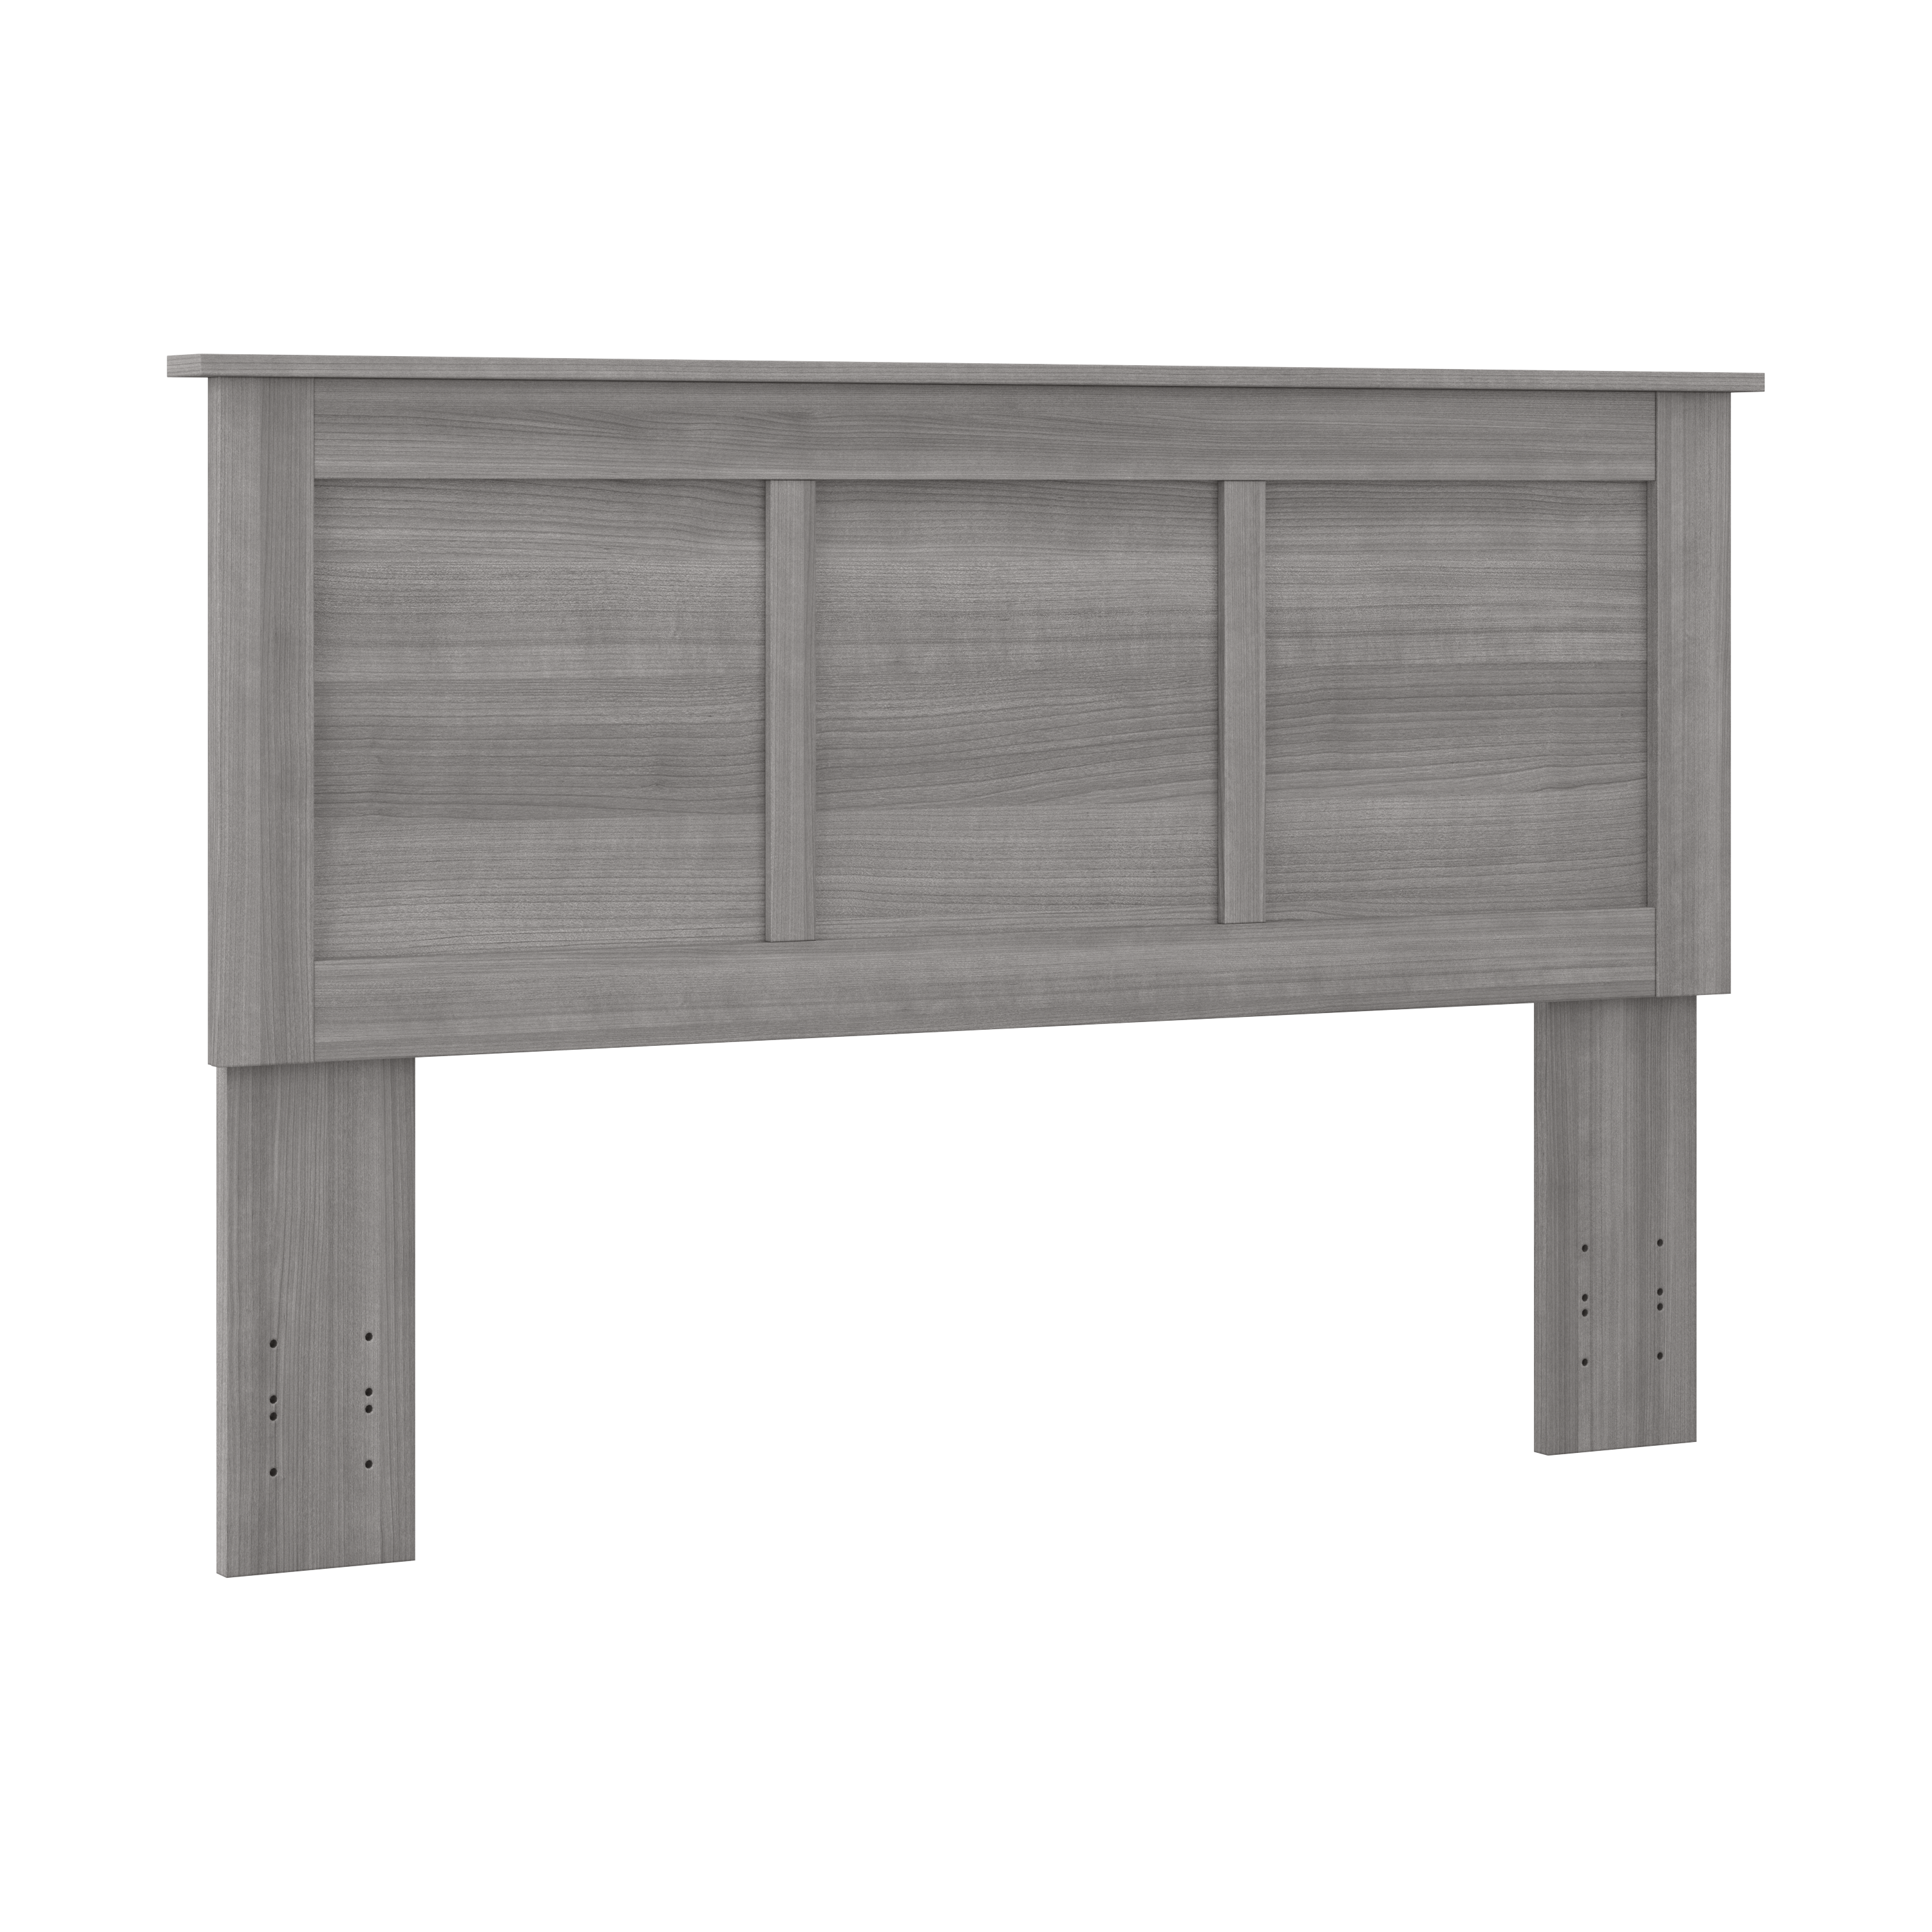 Shop Bush Furniture Somerset Full/Queen Size Headboard 02 STQ165PG #color_platinum gray